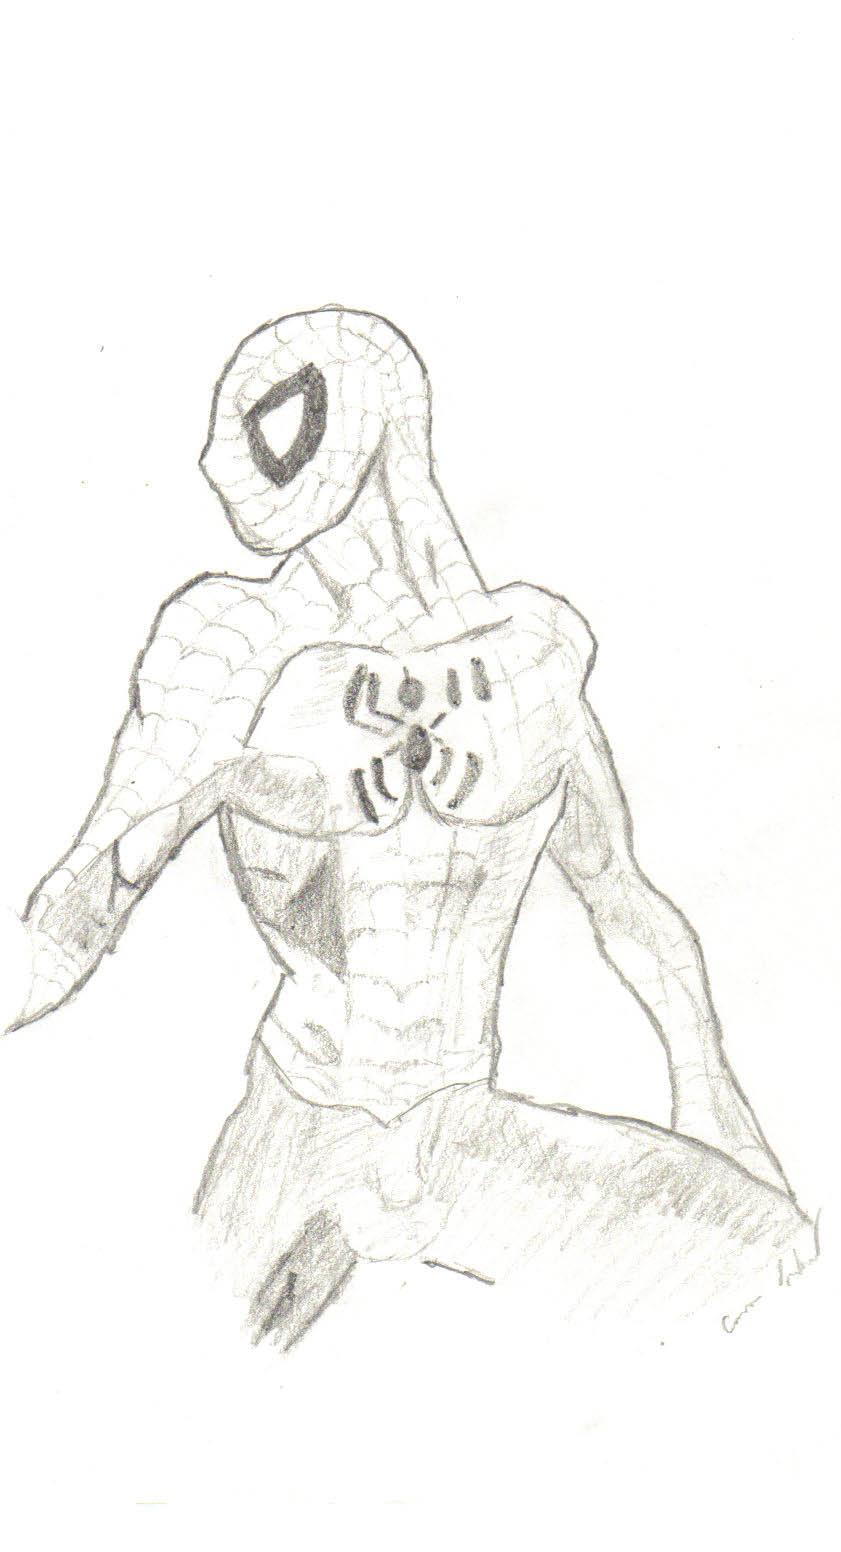 Spiderman by willywonka